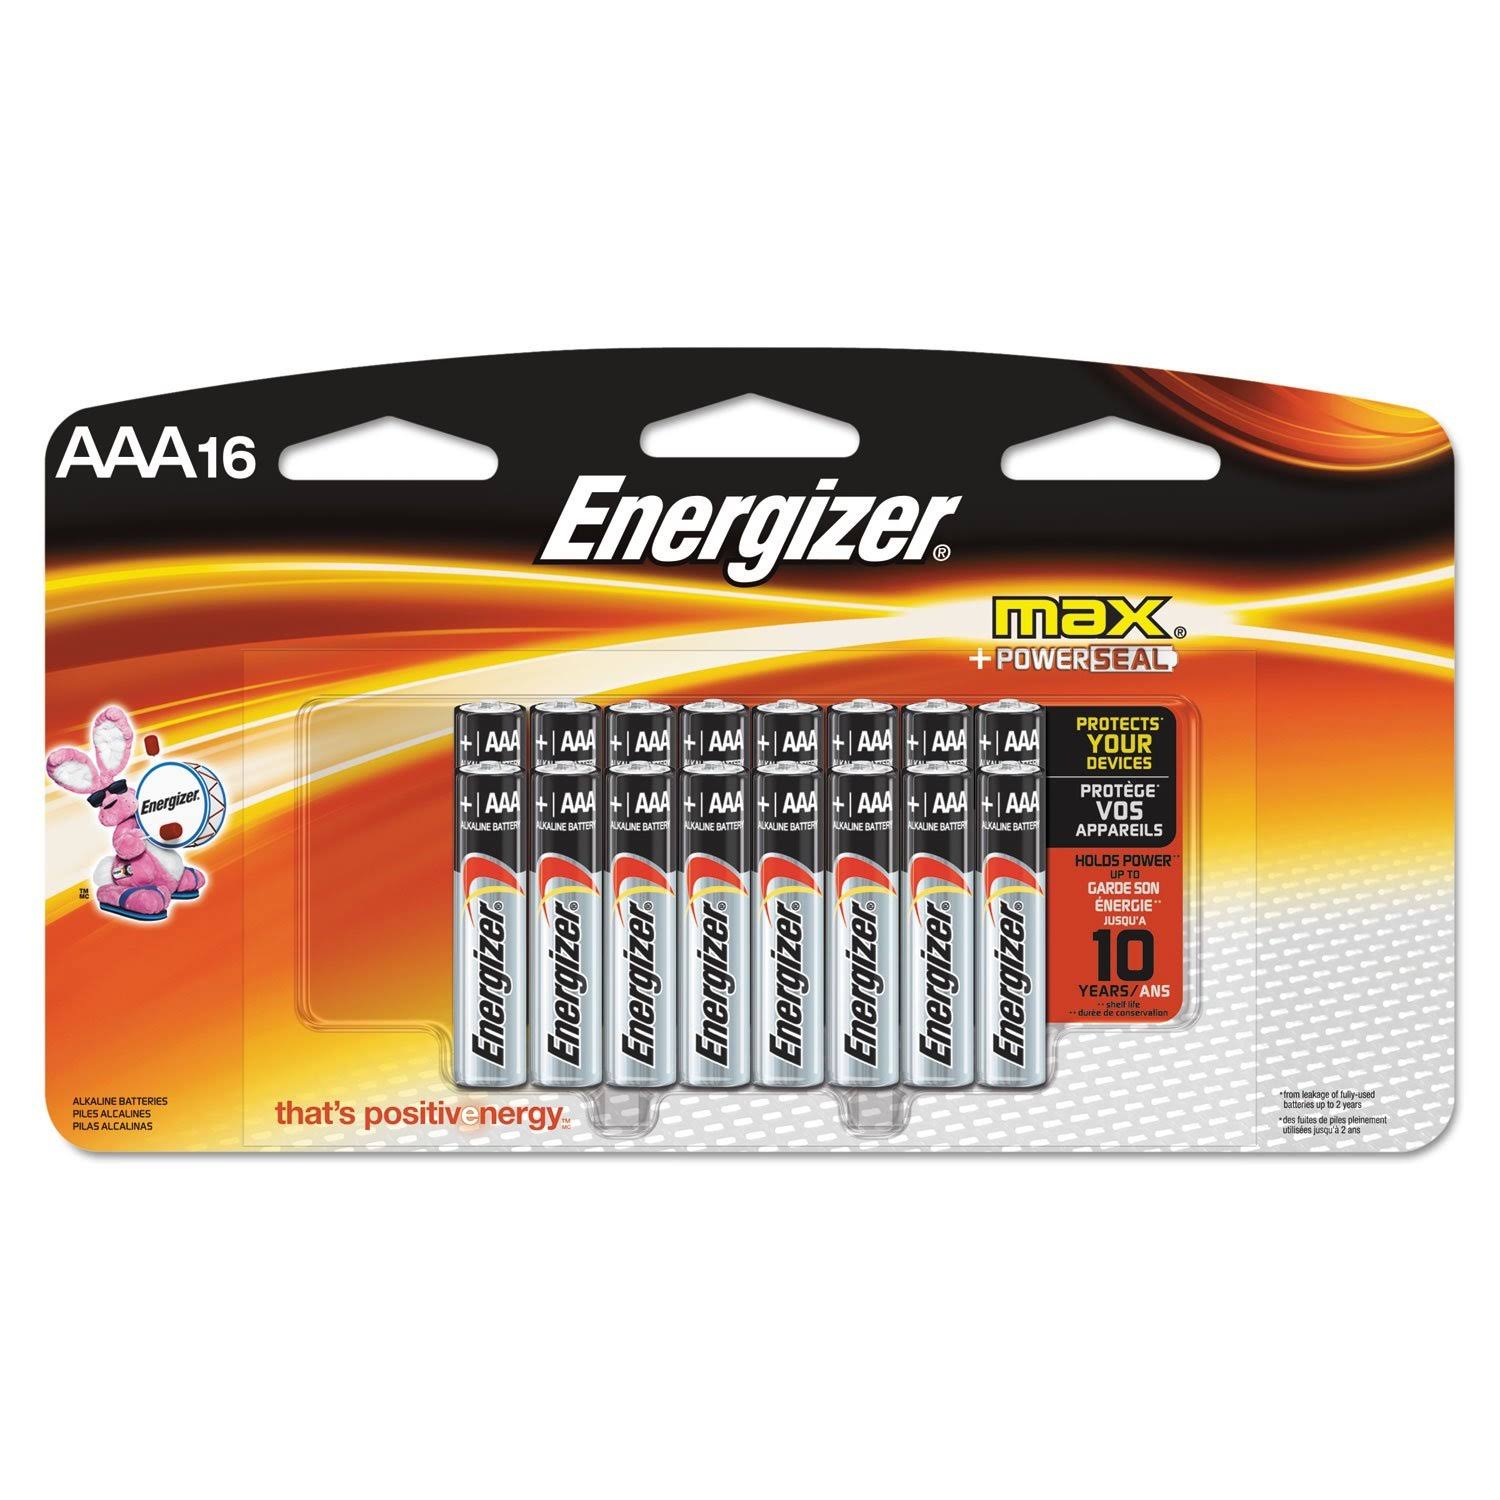 Energizer Max Batteries - 16pk, 1.5V, AAA, Alkaline